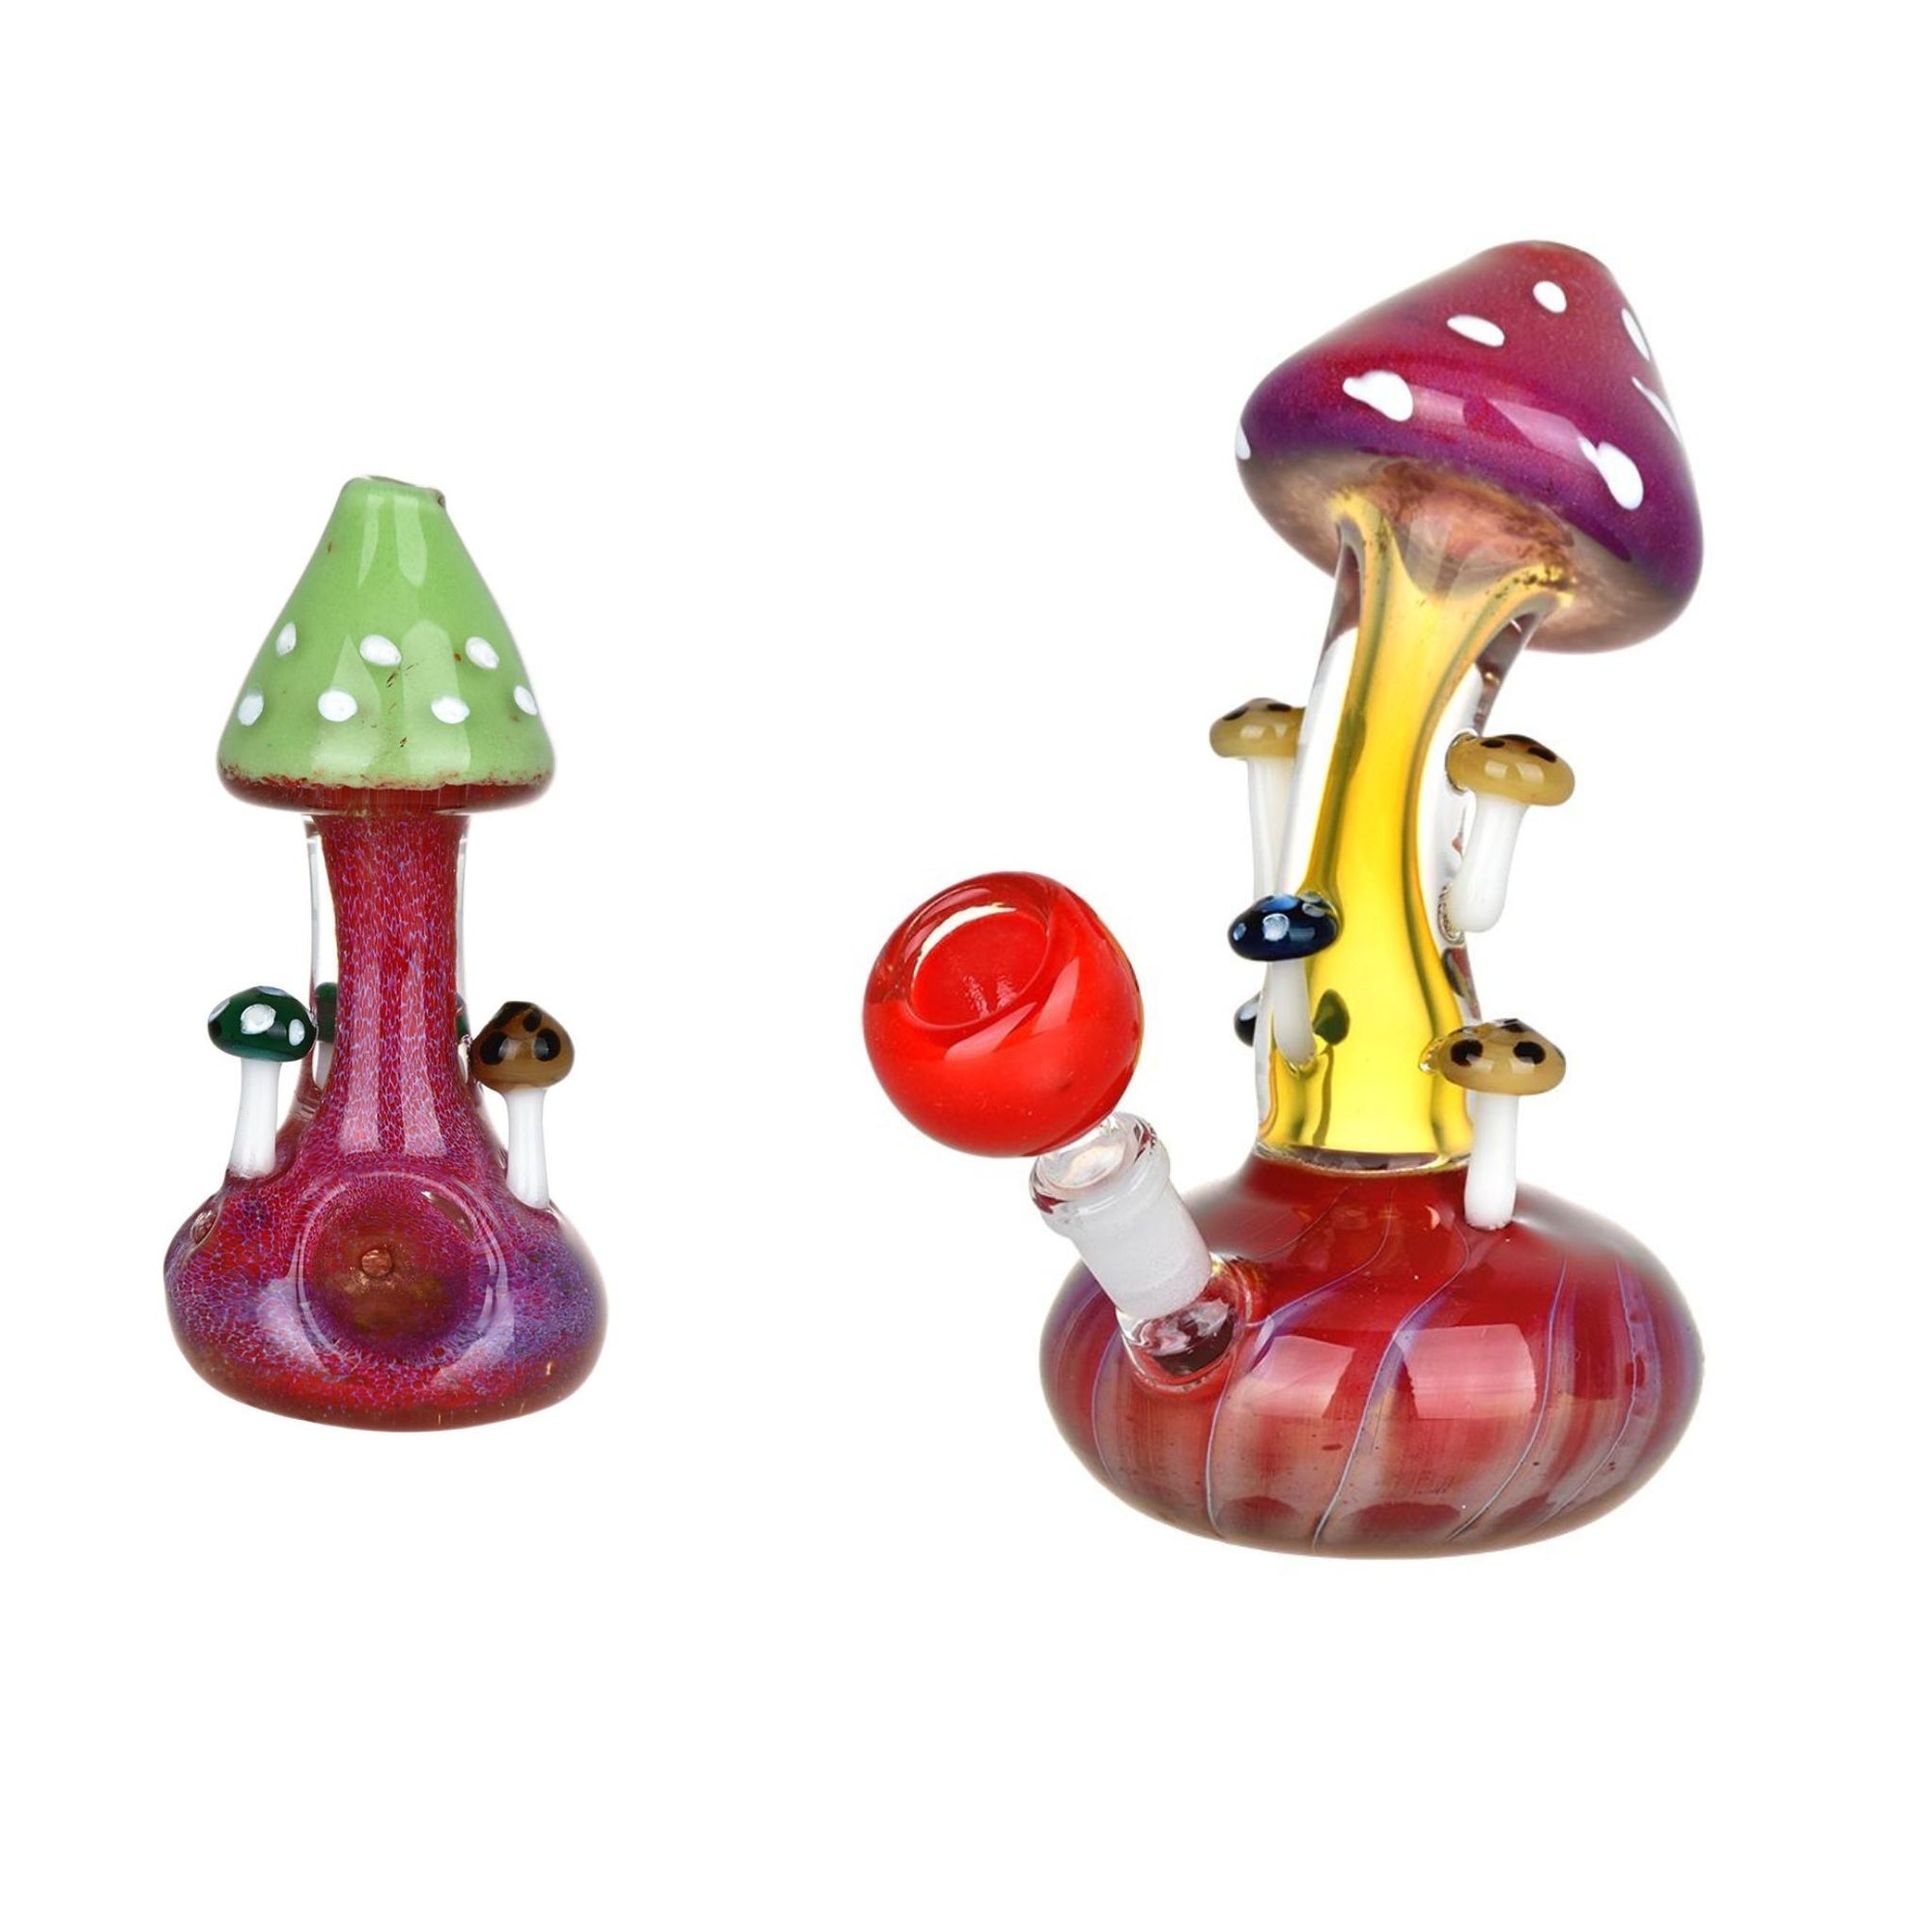 Image-of-mushroom-bong-and-pipe